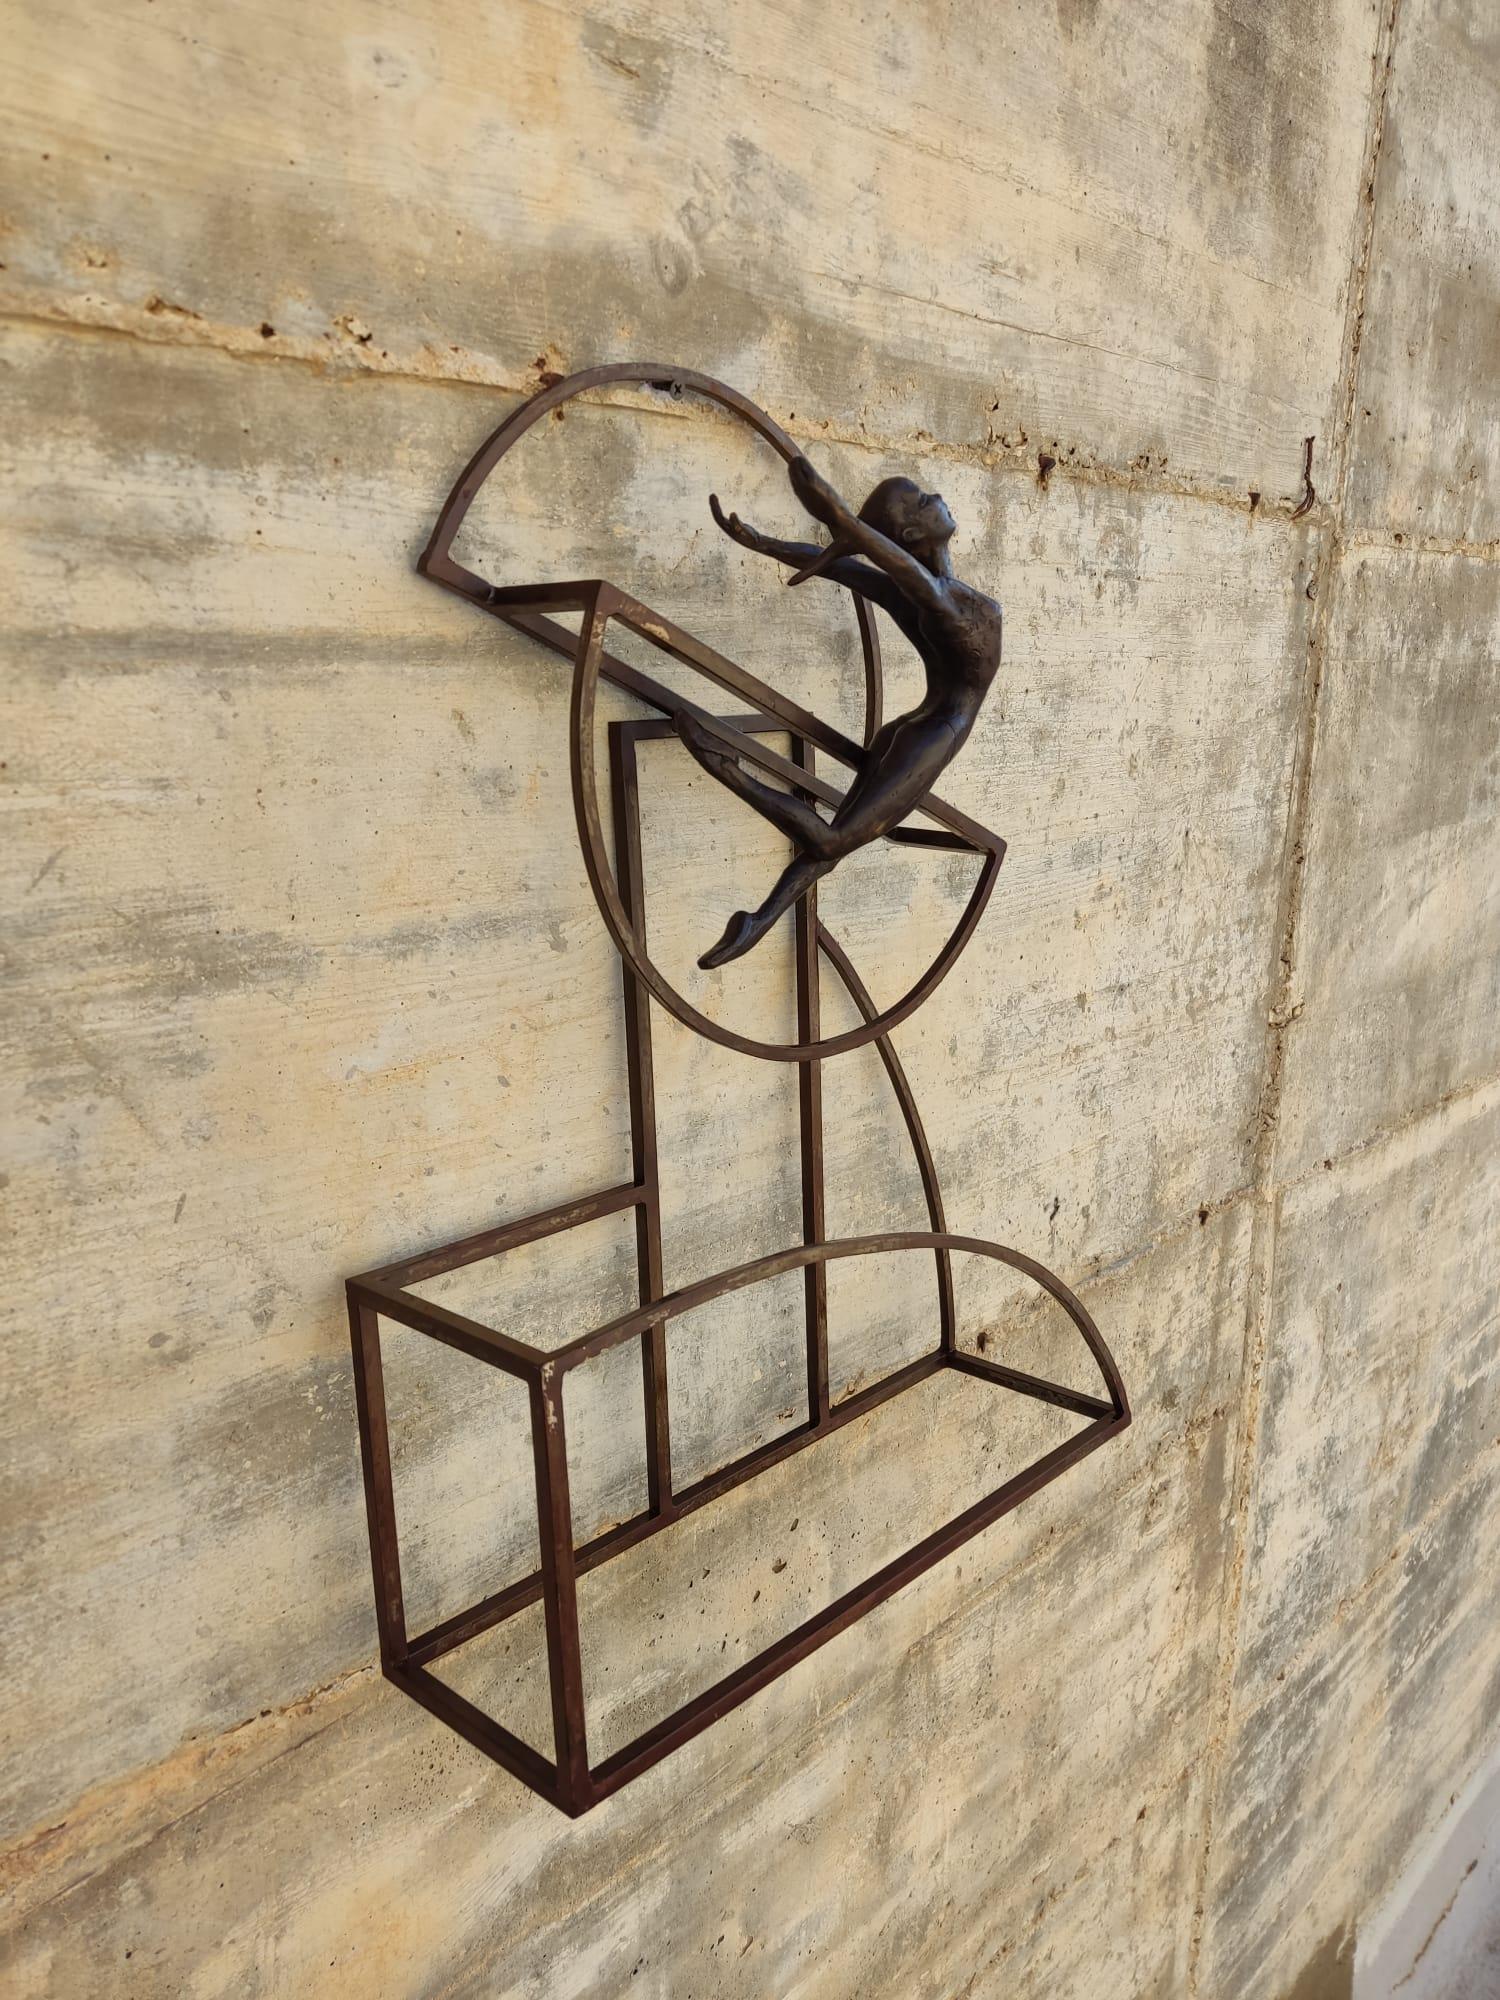 Joan Artigas Planas Figurative Sculpture - "Hop" contemporary bronze table sculpture figurative dynamic energy motion girl